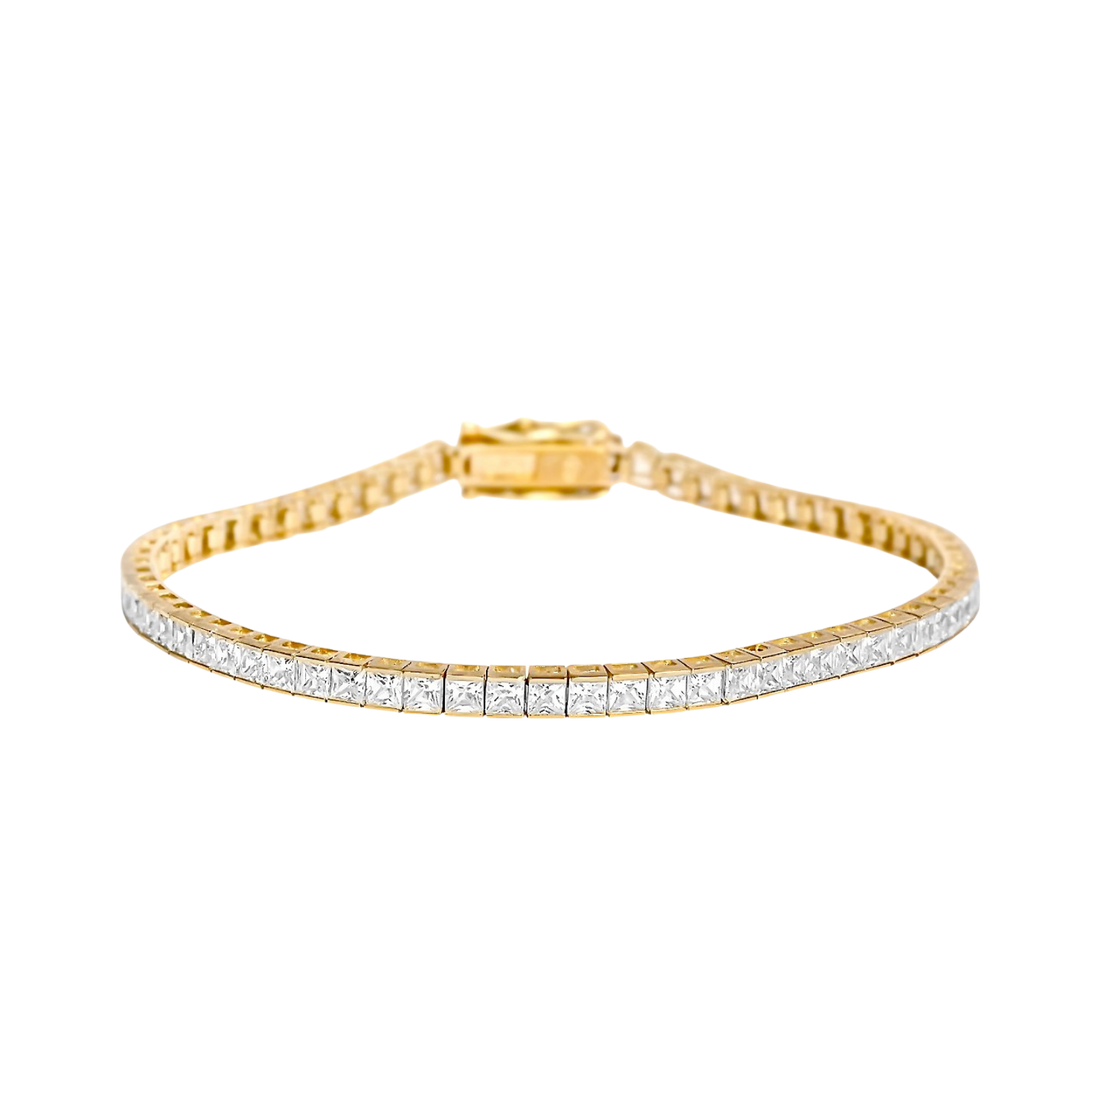 7.5" 10k bracelet canada amazon, yellow gold tennis bracelet canada, diamond tennis bracelet canada, 10k gold tennis bracelet